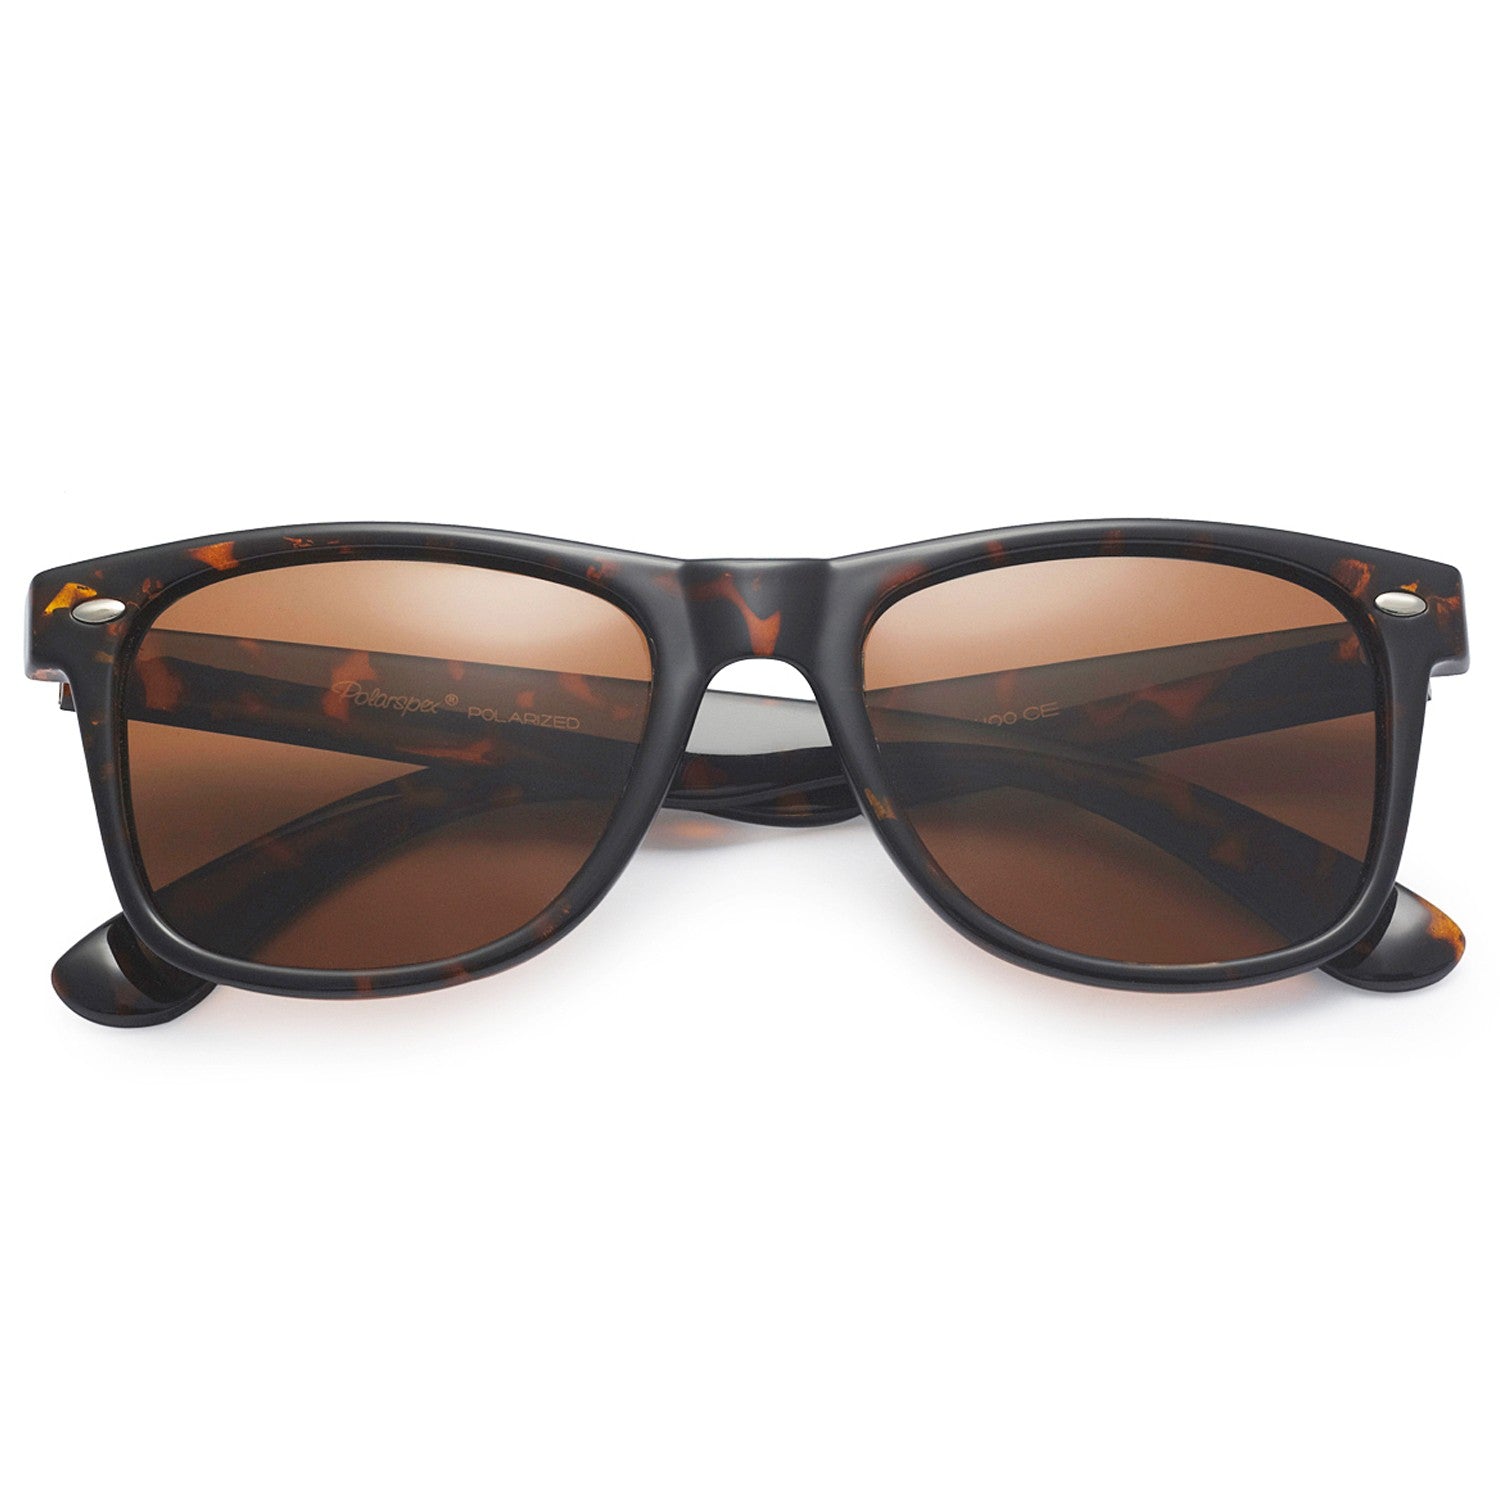 Polarspex Polarized 80's Retro Style Unisex Sunglasses with Tortoise Frames and Brown Lenses